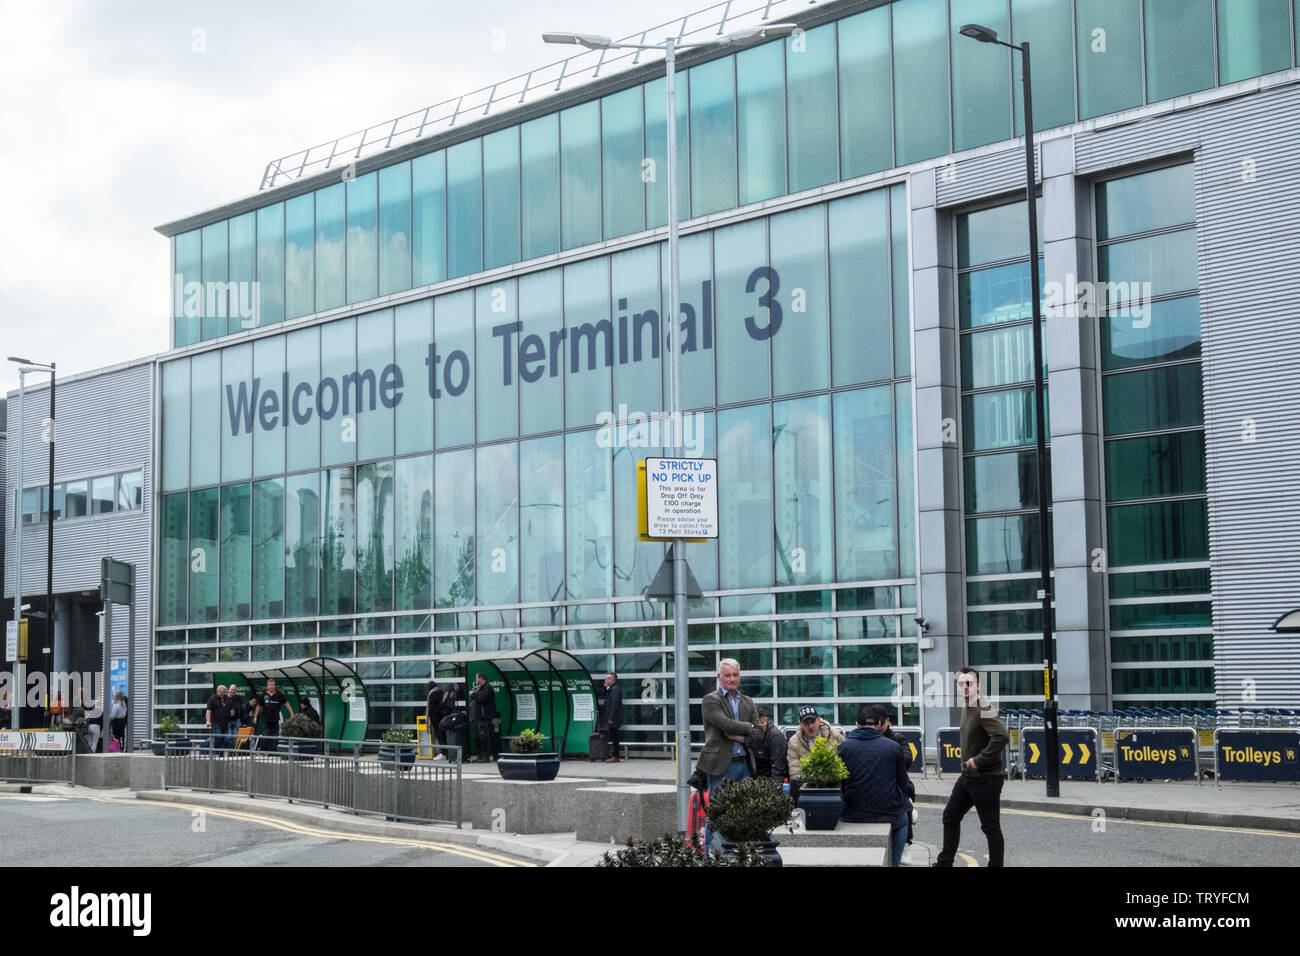 Terminal 3,Terminal Three,airport,Manchester Airport,Manchester,northern,city,England,Britain,British,GB,UK,Europe, Stock Photo